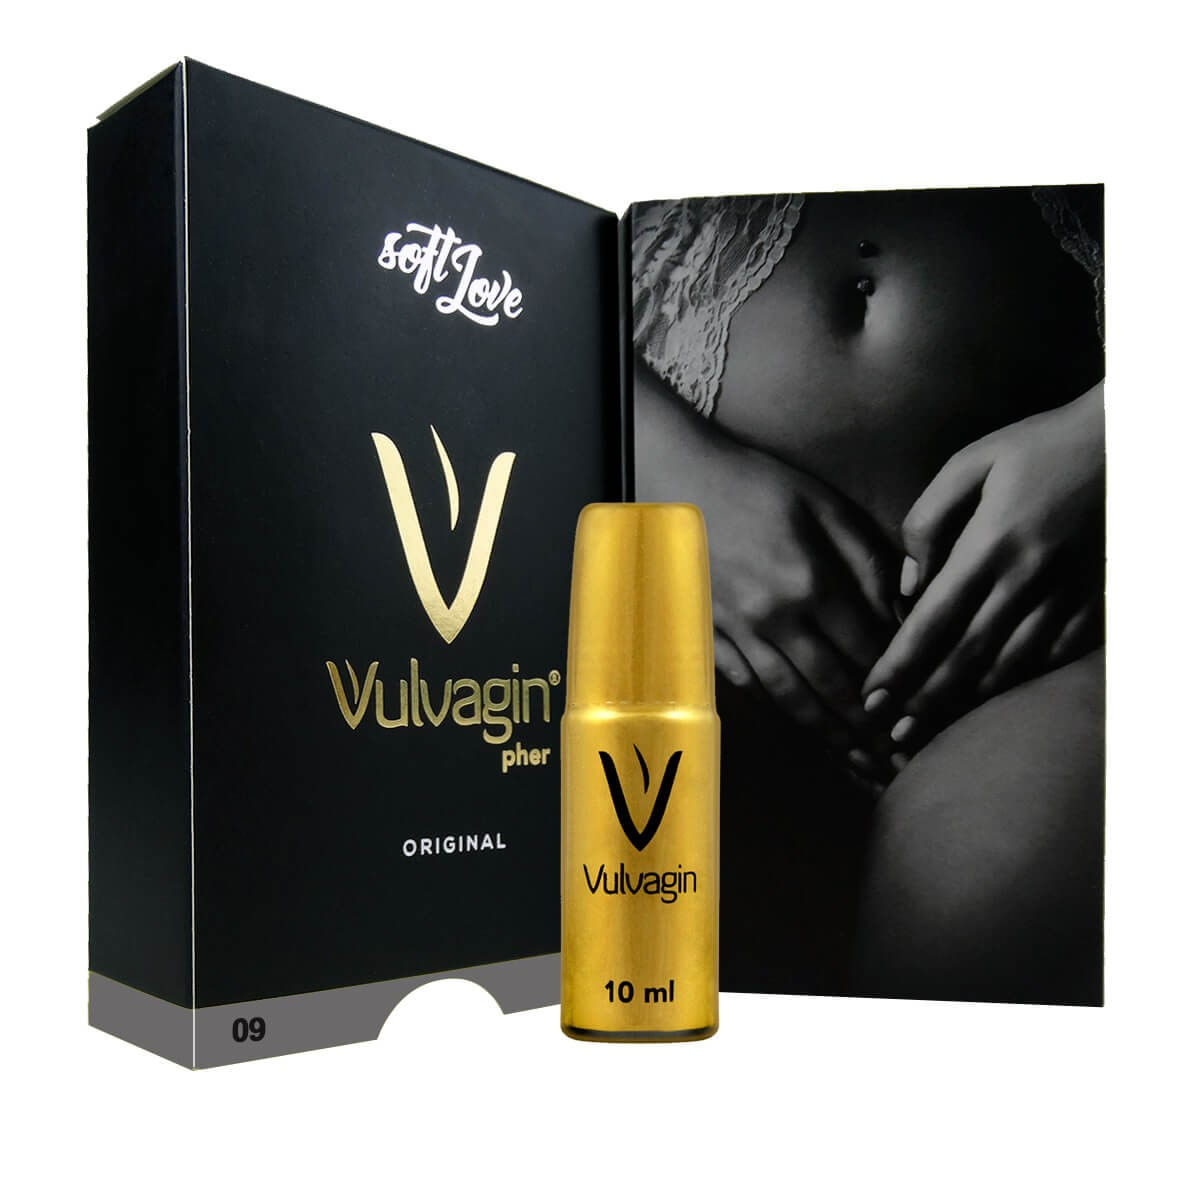 Vulvagin Pher Perfume de Vagina com Feromônio 10ml Soft Love